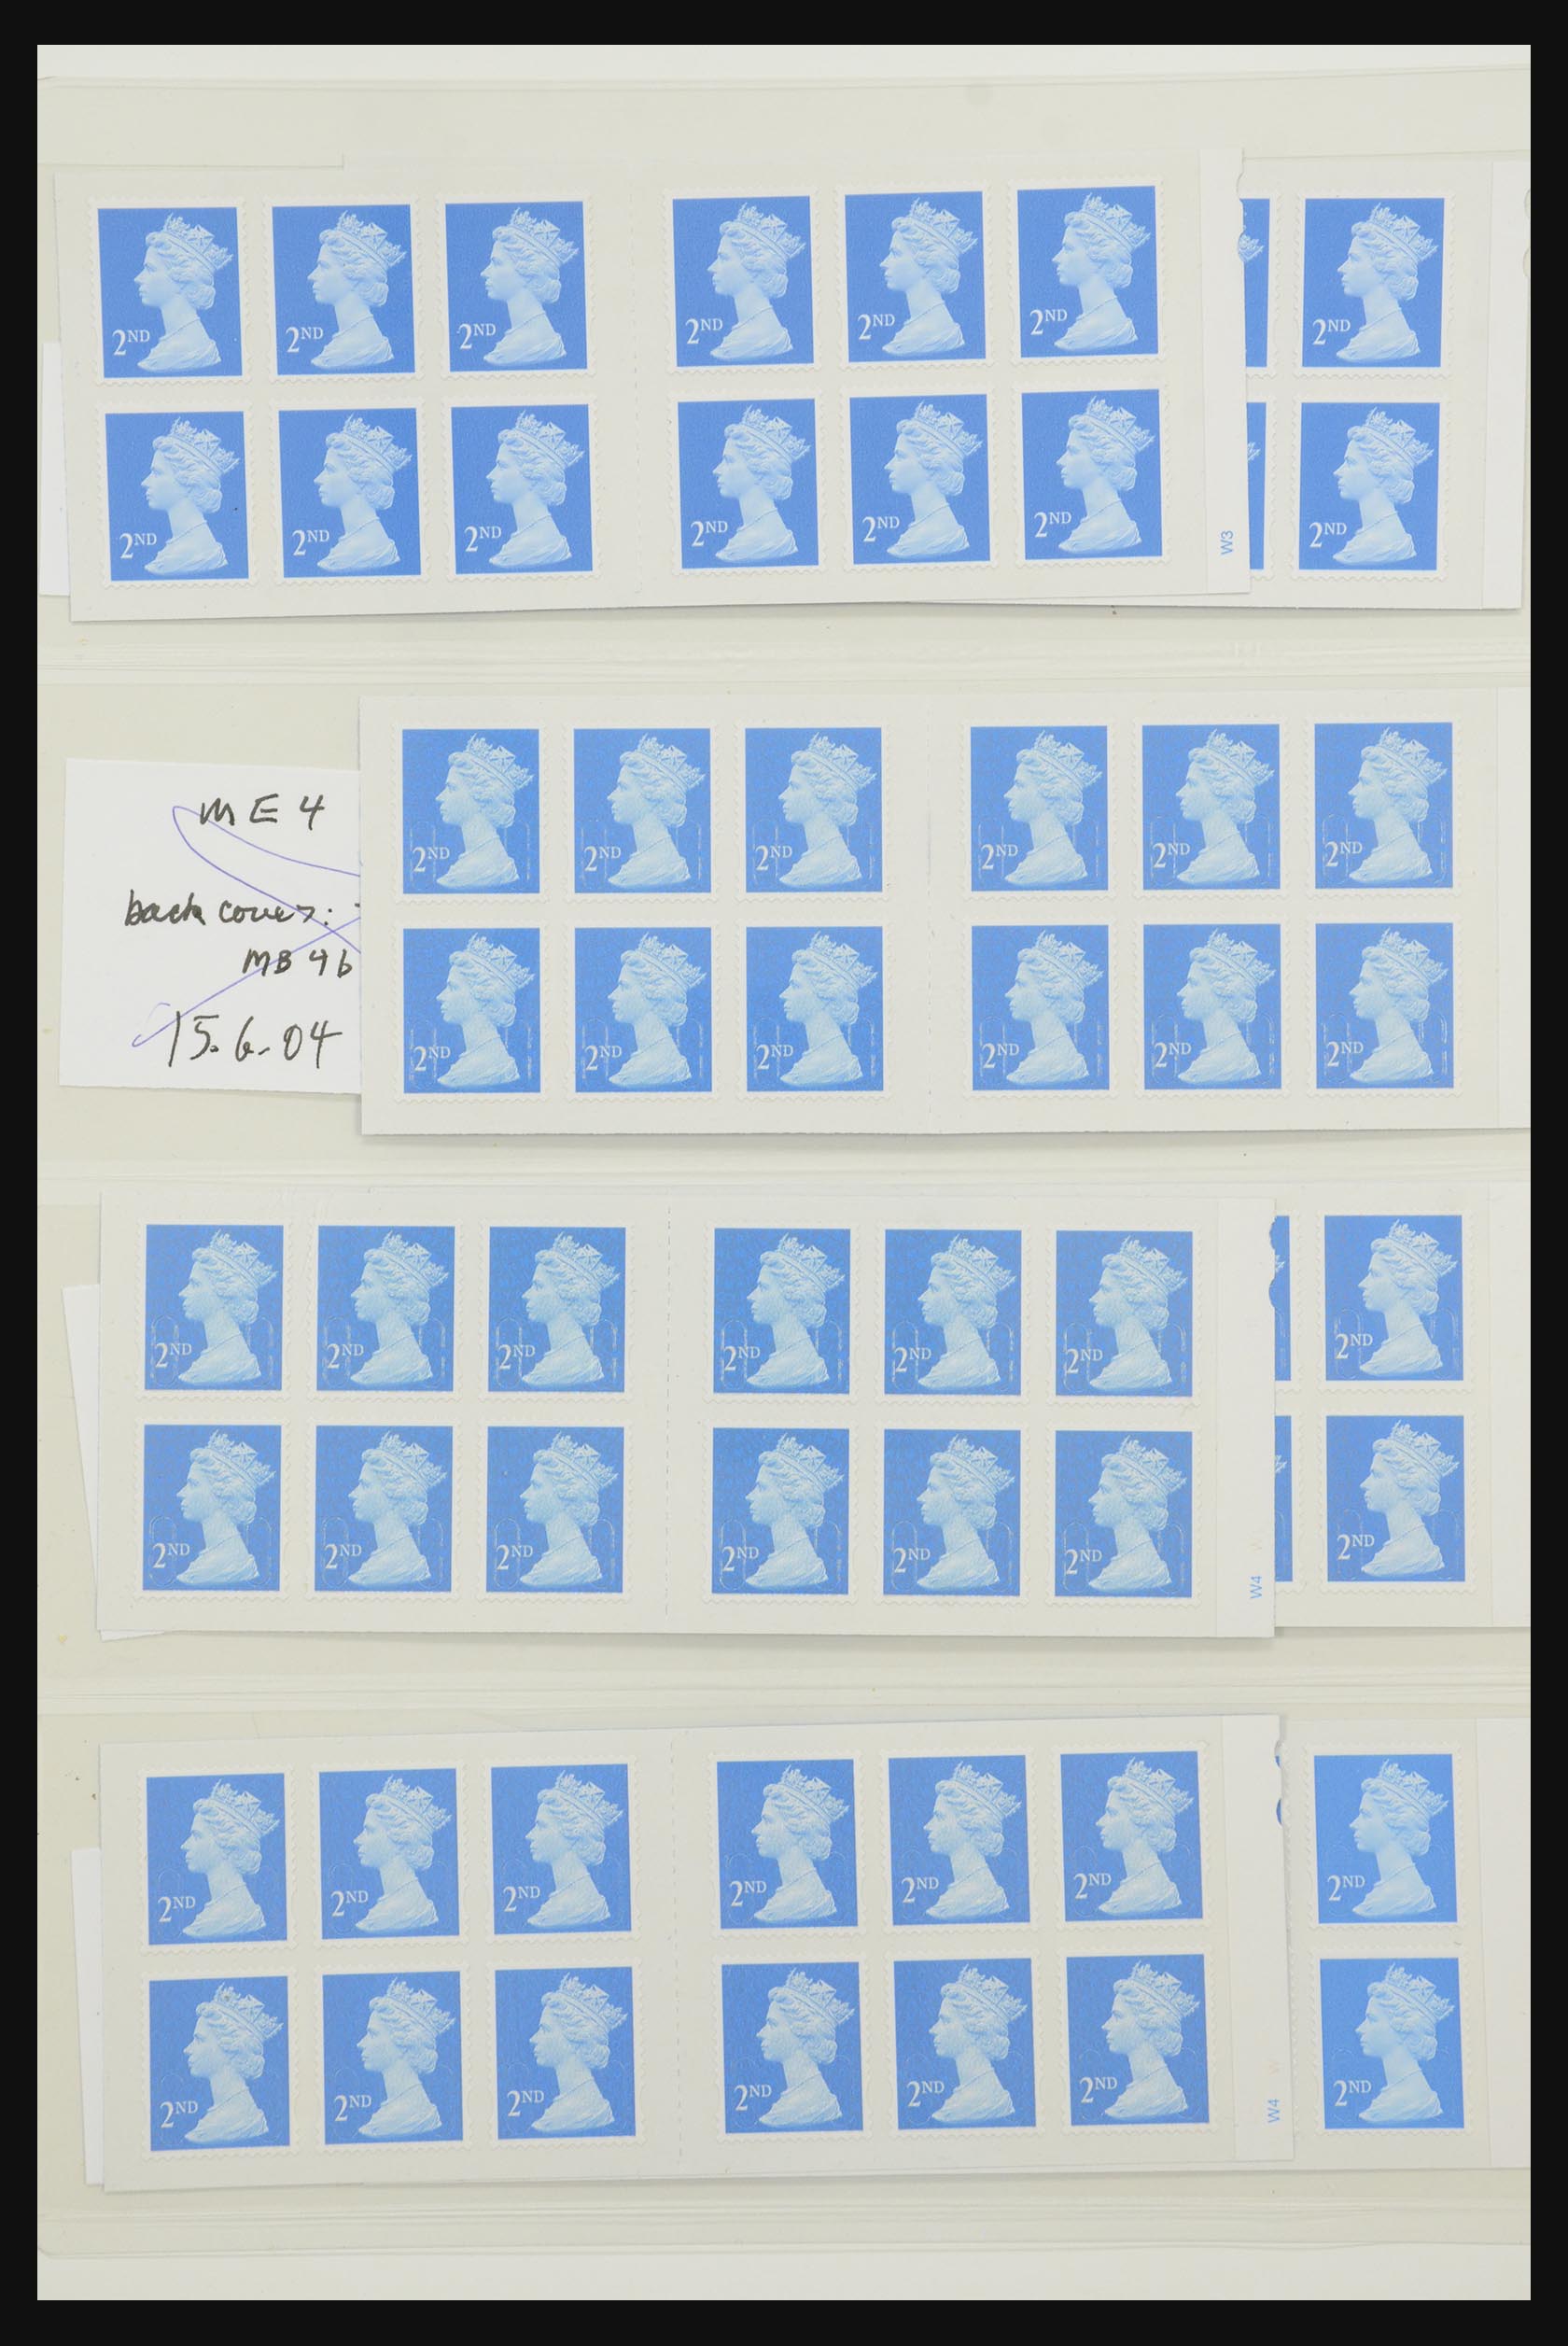 31959 344 - 31959 Great Britain stampbooklets 1987-2016!!